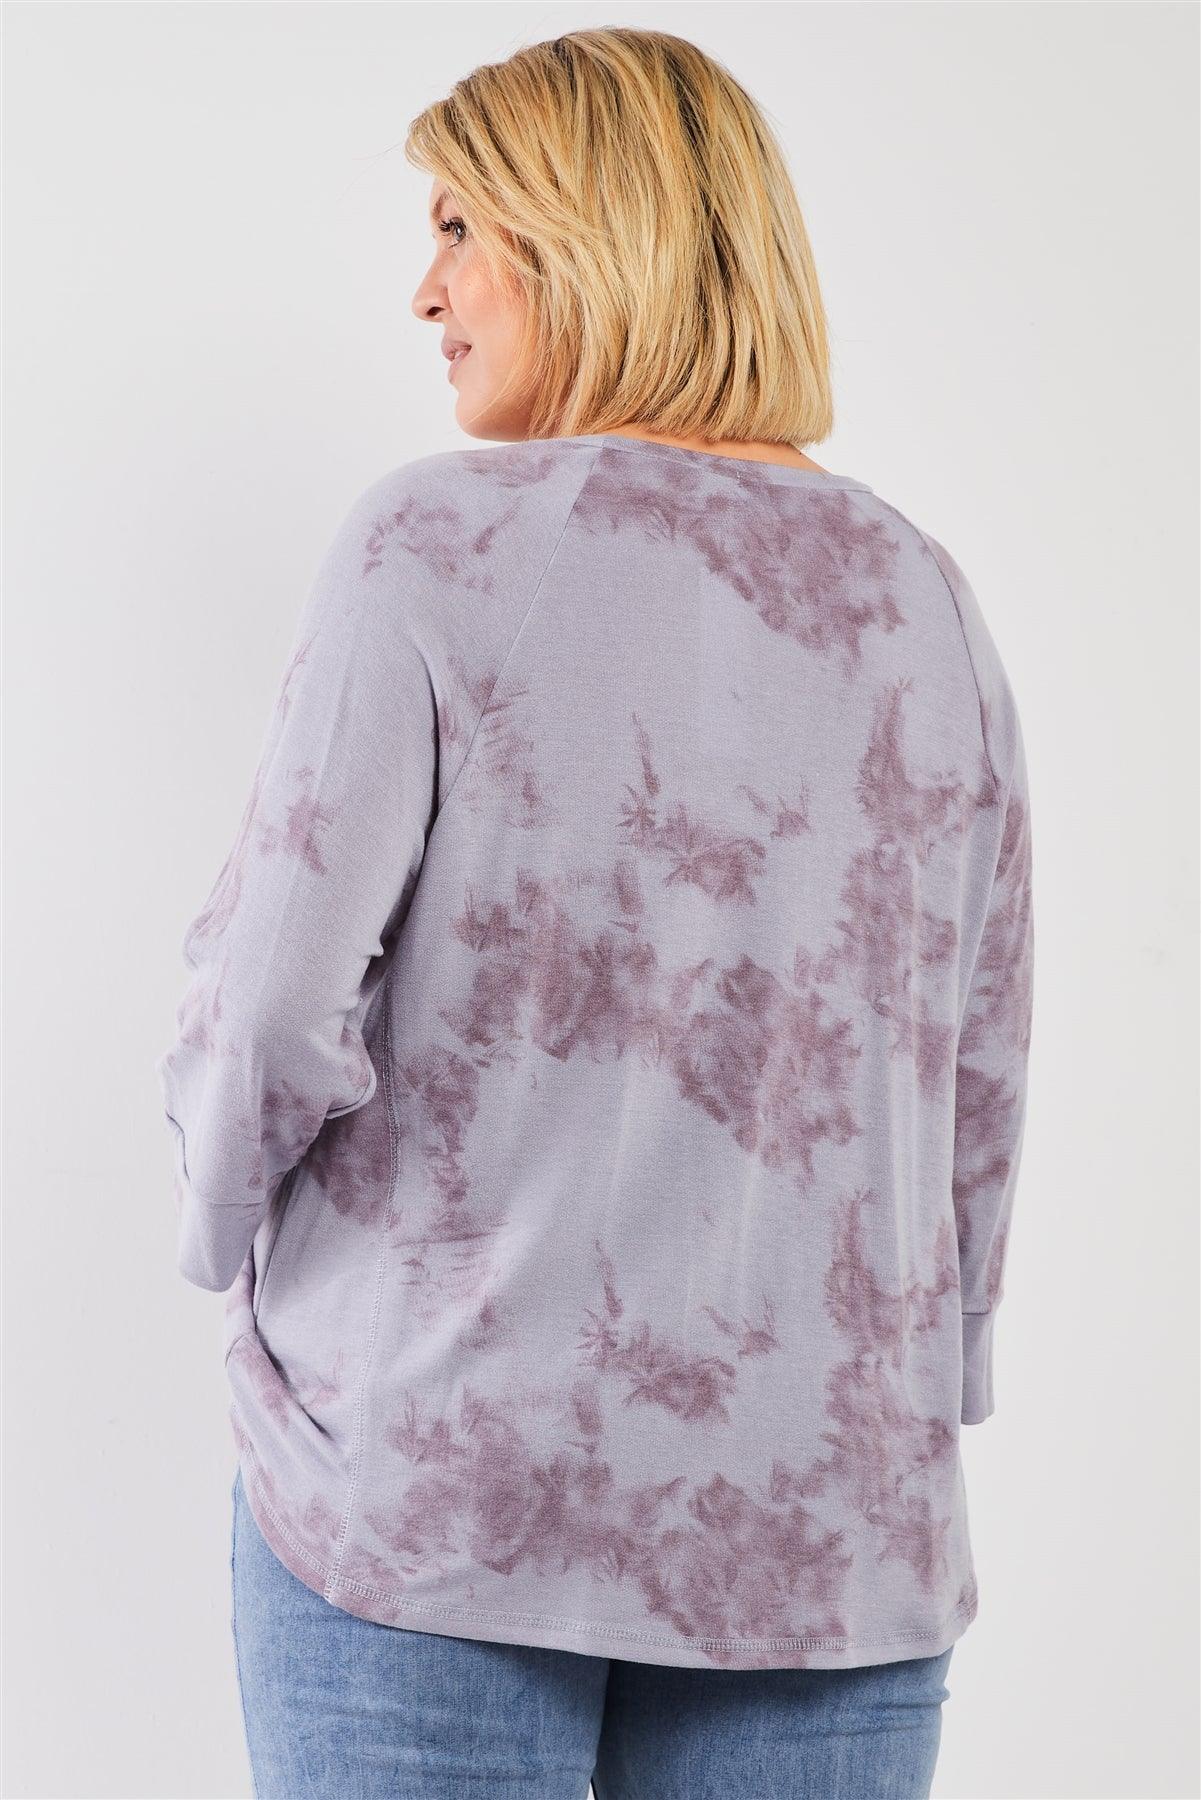 Junior Plus Lavender Tie-Dye Acid Wash Print Round Neck Long Sleeve Drop Shoulder Relaxed Sweatshirt Top /3-2-1